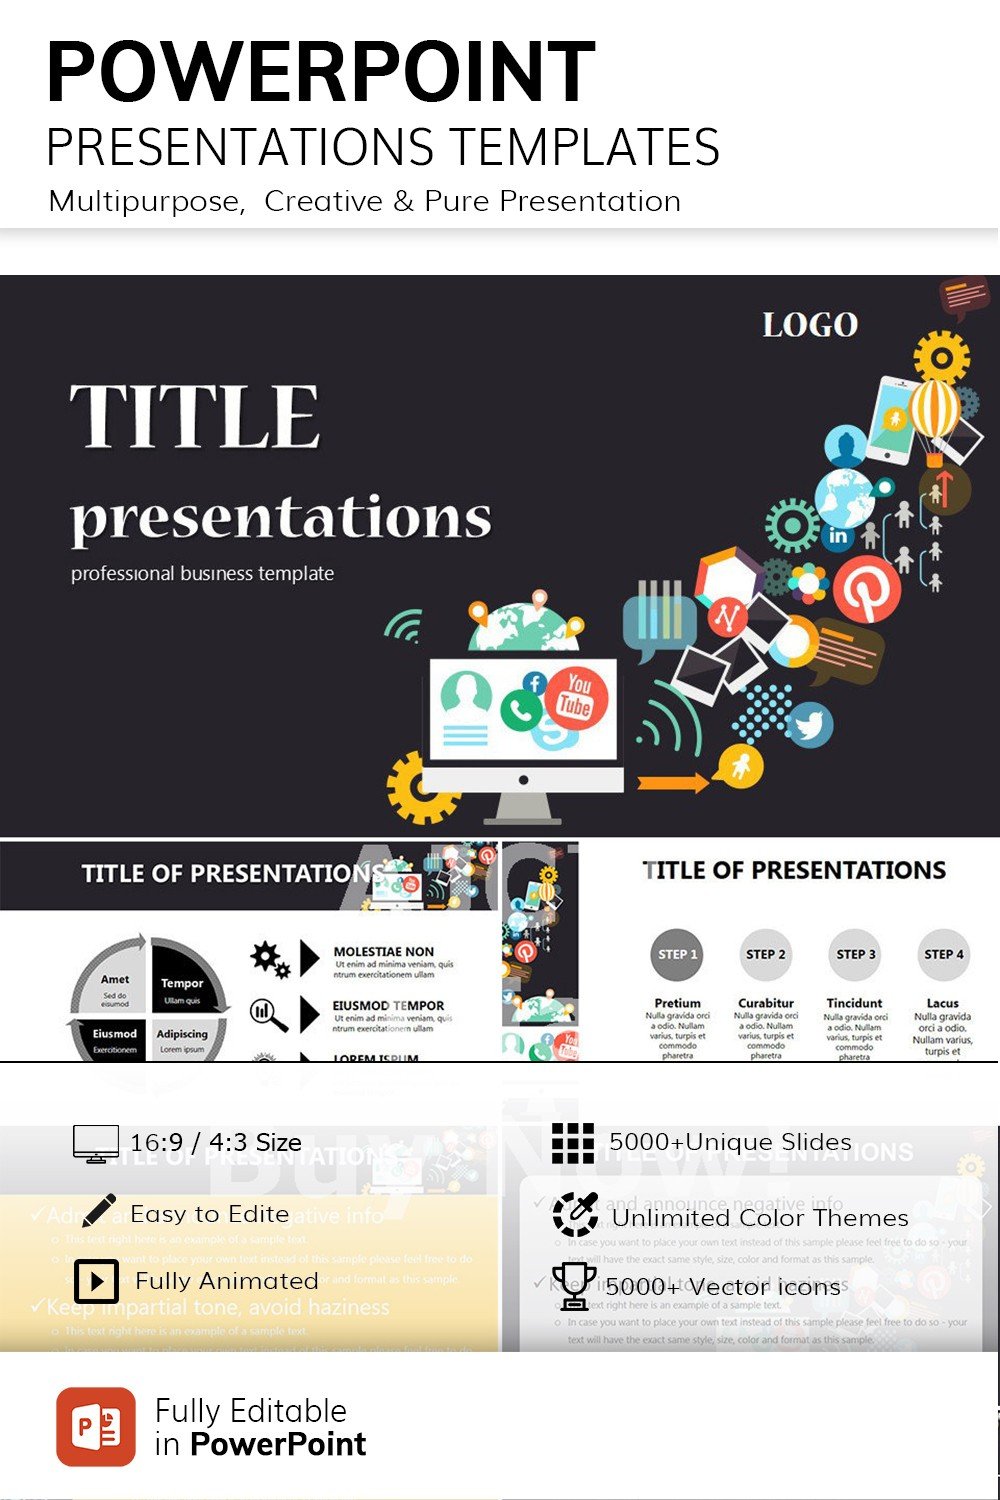 Online Marketing PowerPoint templates | ImagineLayout.com